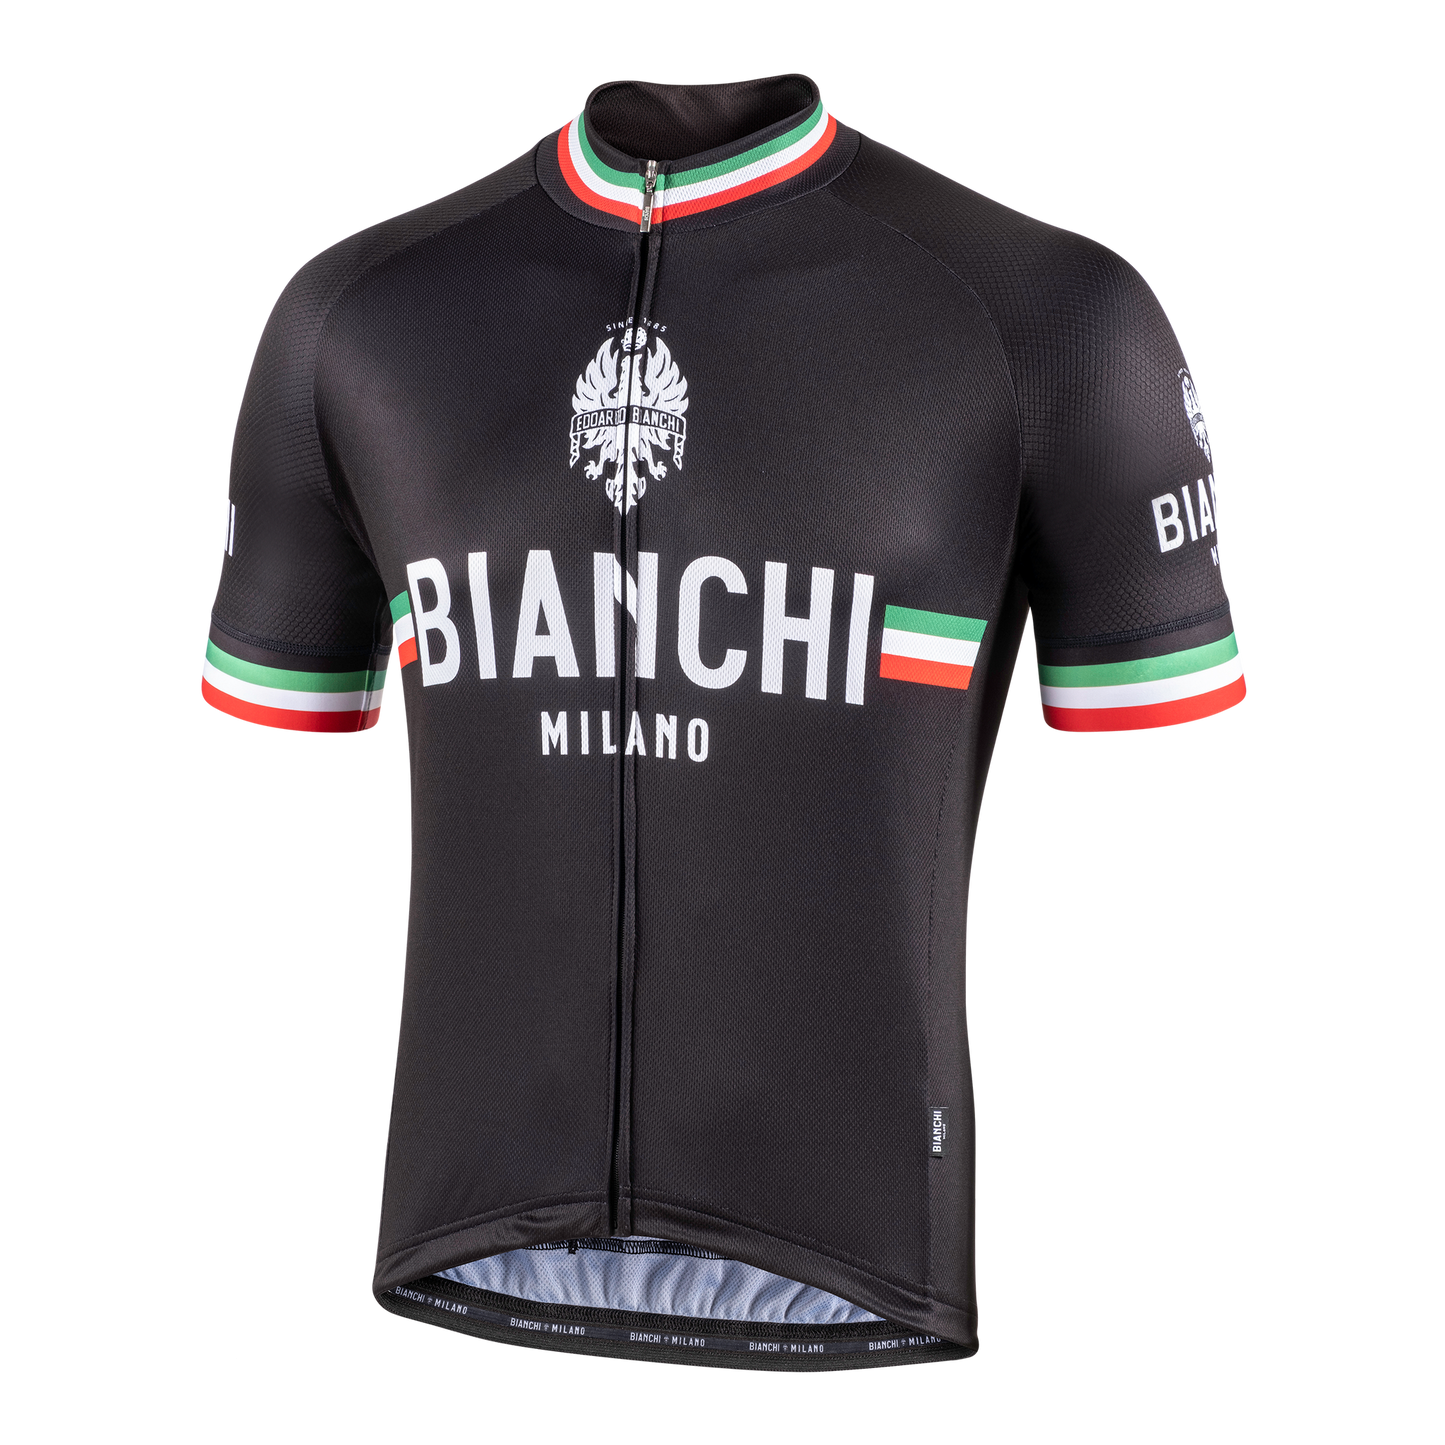 Bianchi Isalle Men's Cycling Jersey (Black) S, M, L, XL, 2XL, 3XL, 4XL